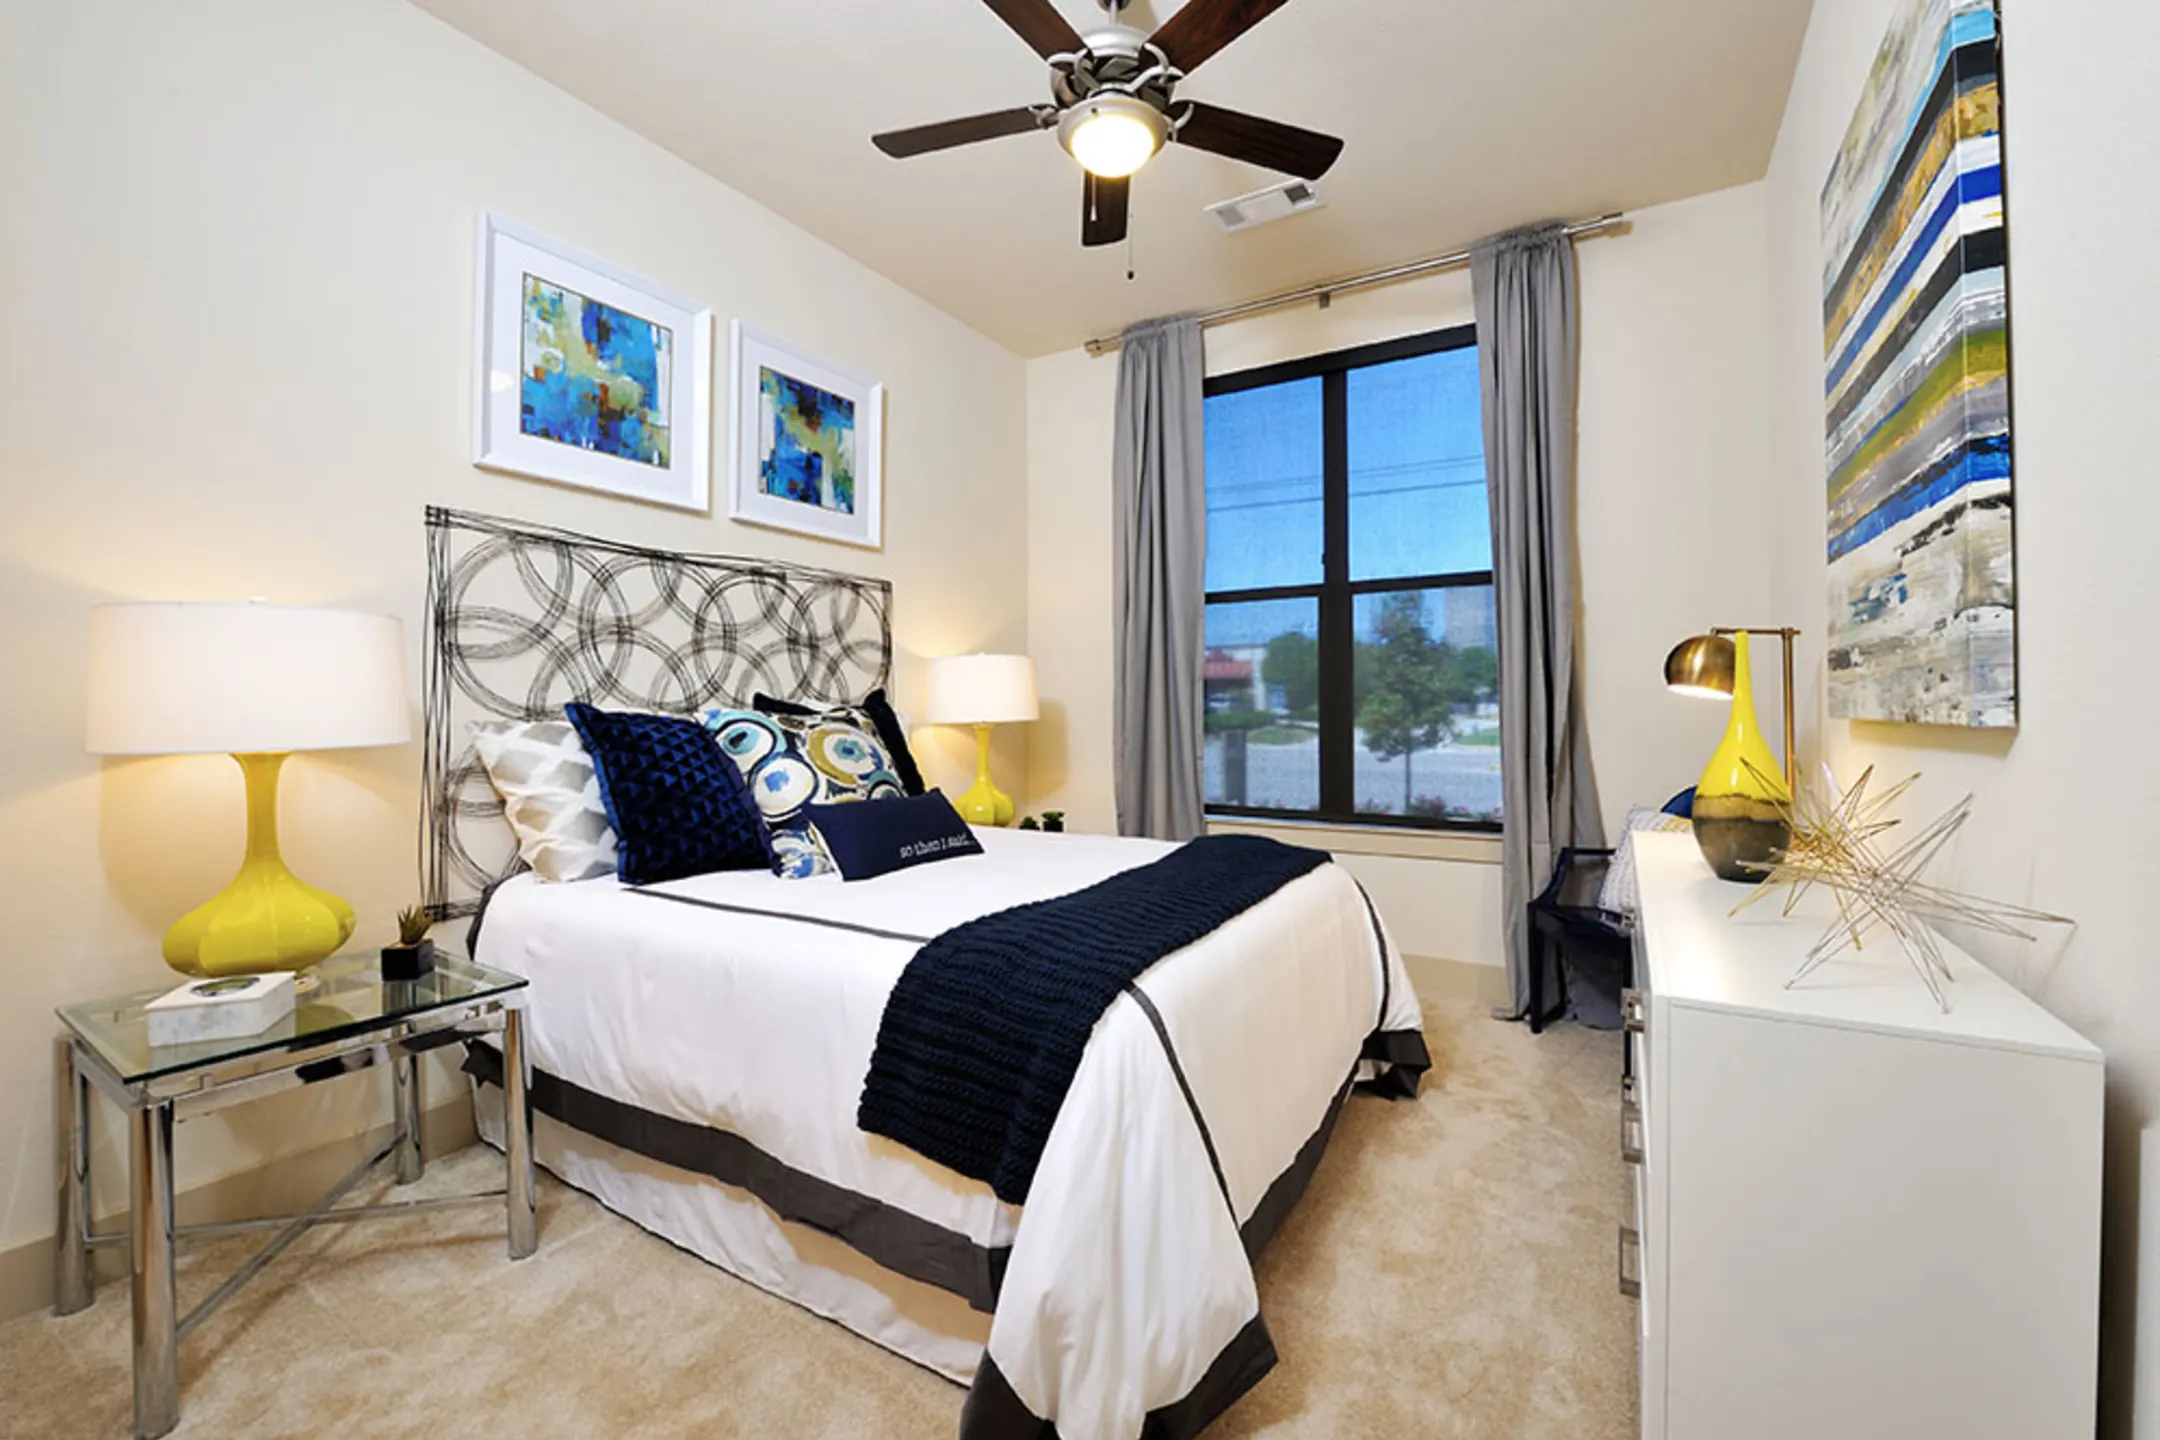 Bedroom - 77054 Luxury Properties - Houston, TX